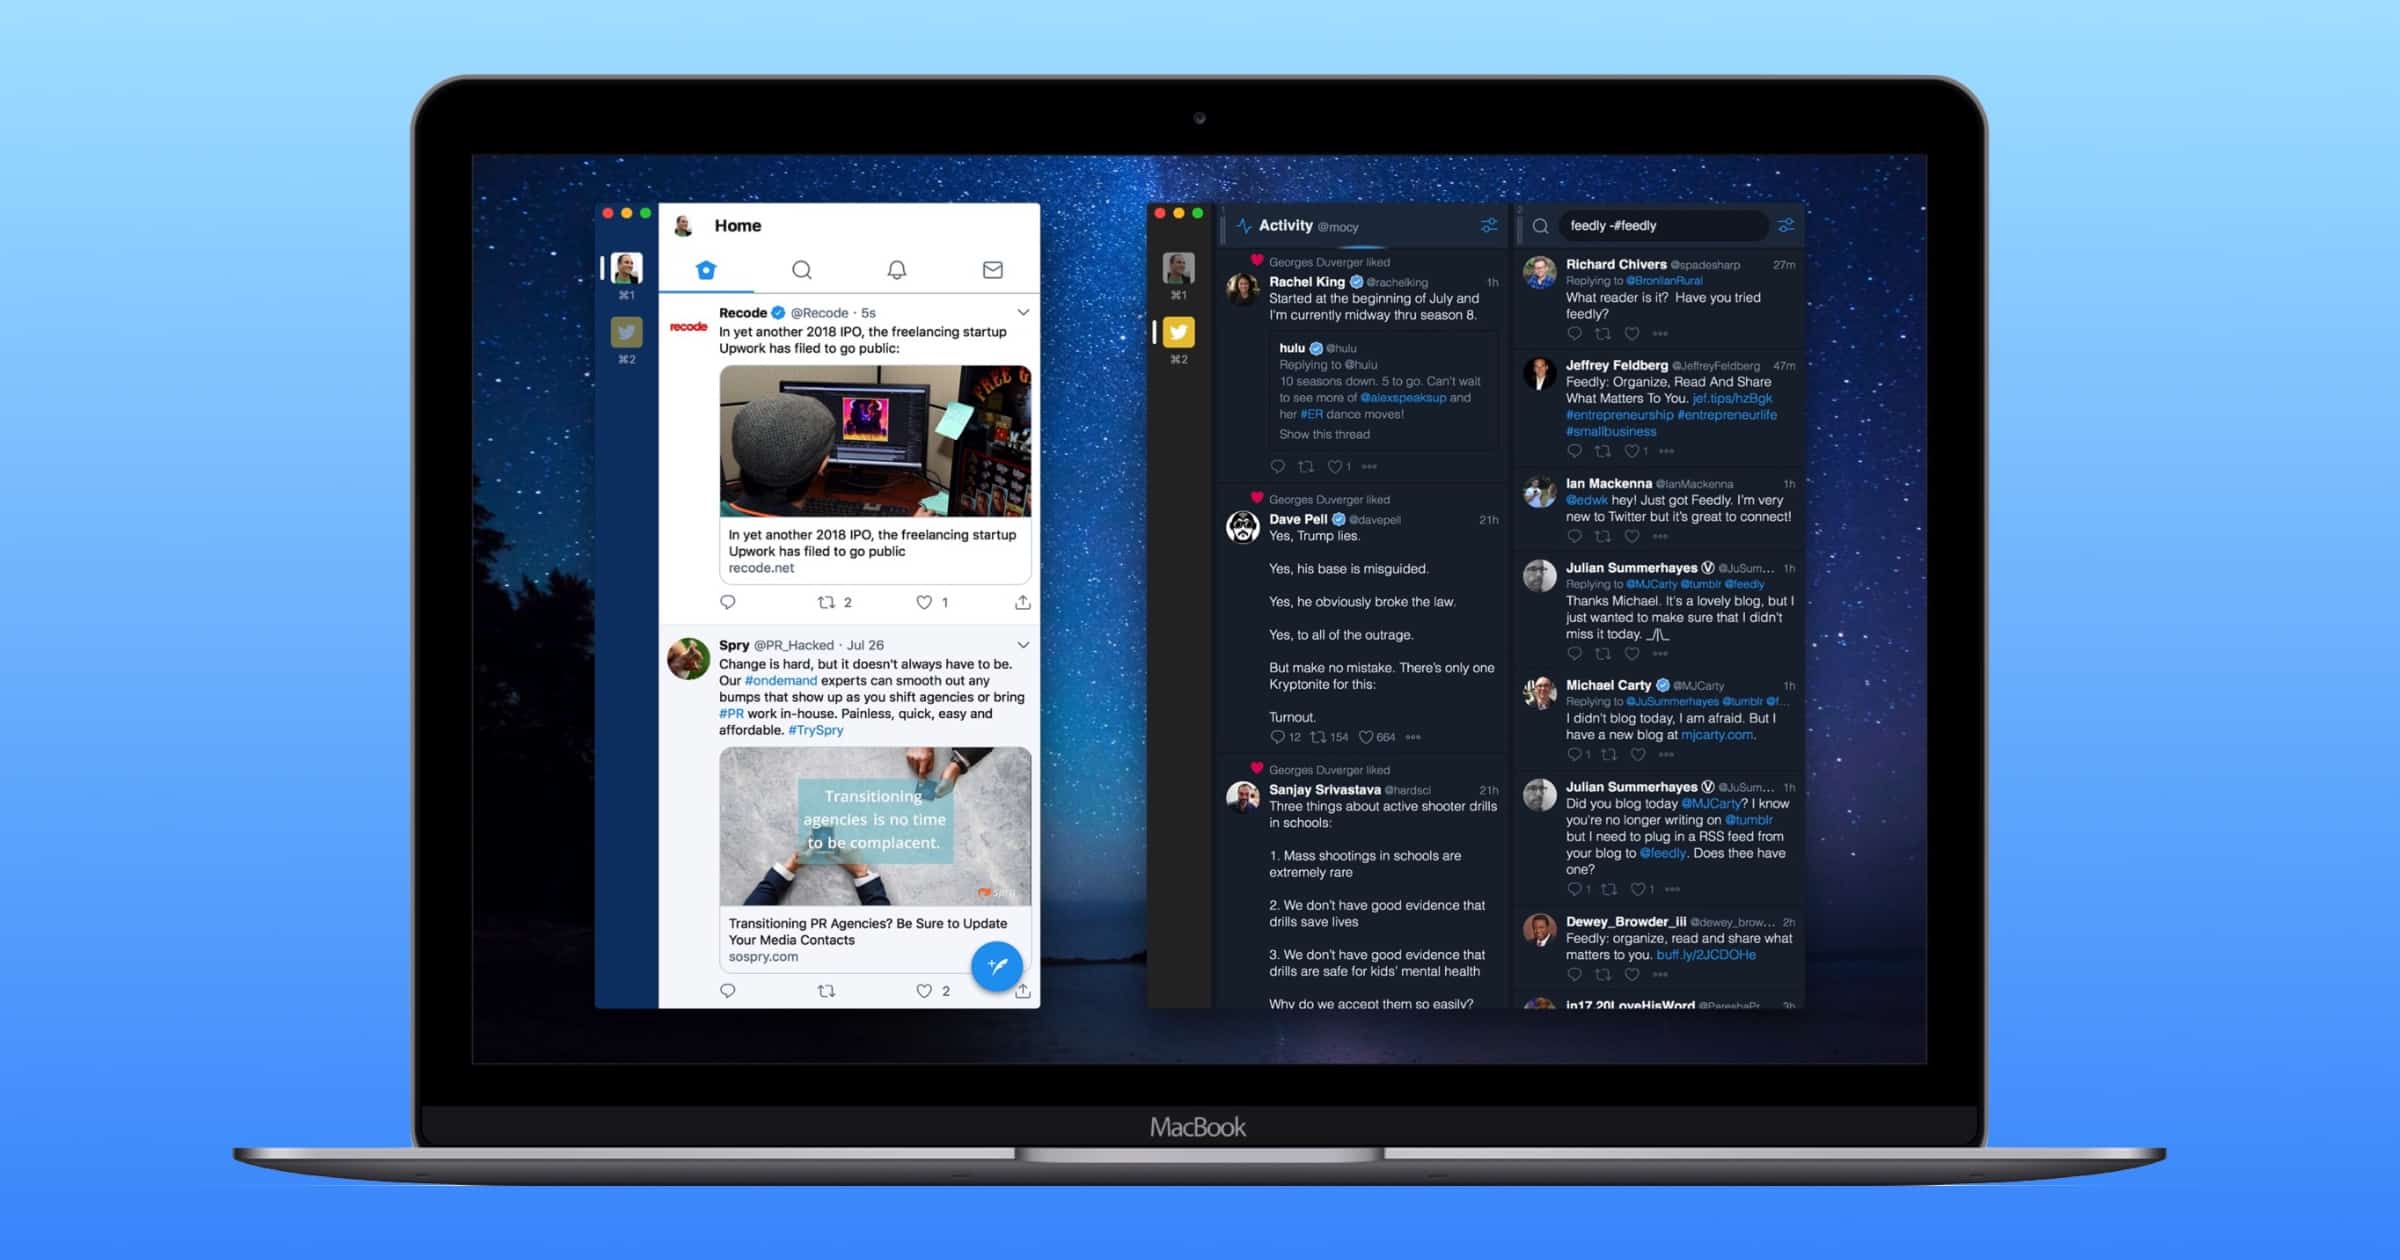 Twitter Client ‘Tweetbot’ Supports M1 Macs, macOS Big Sur